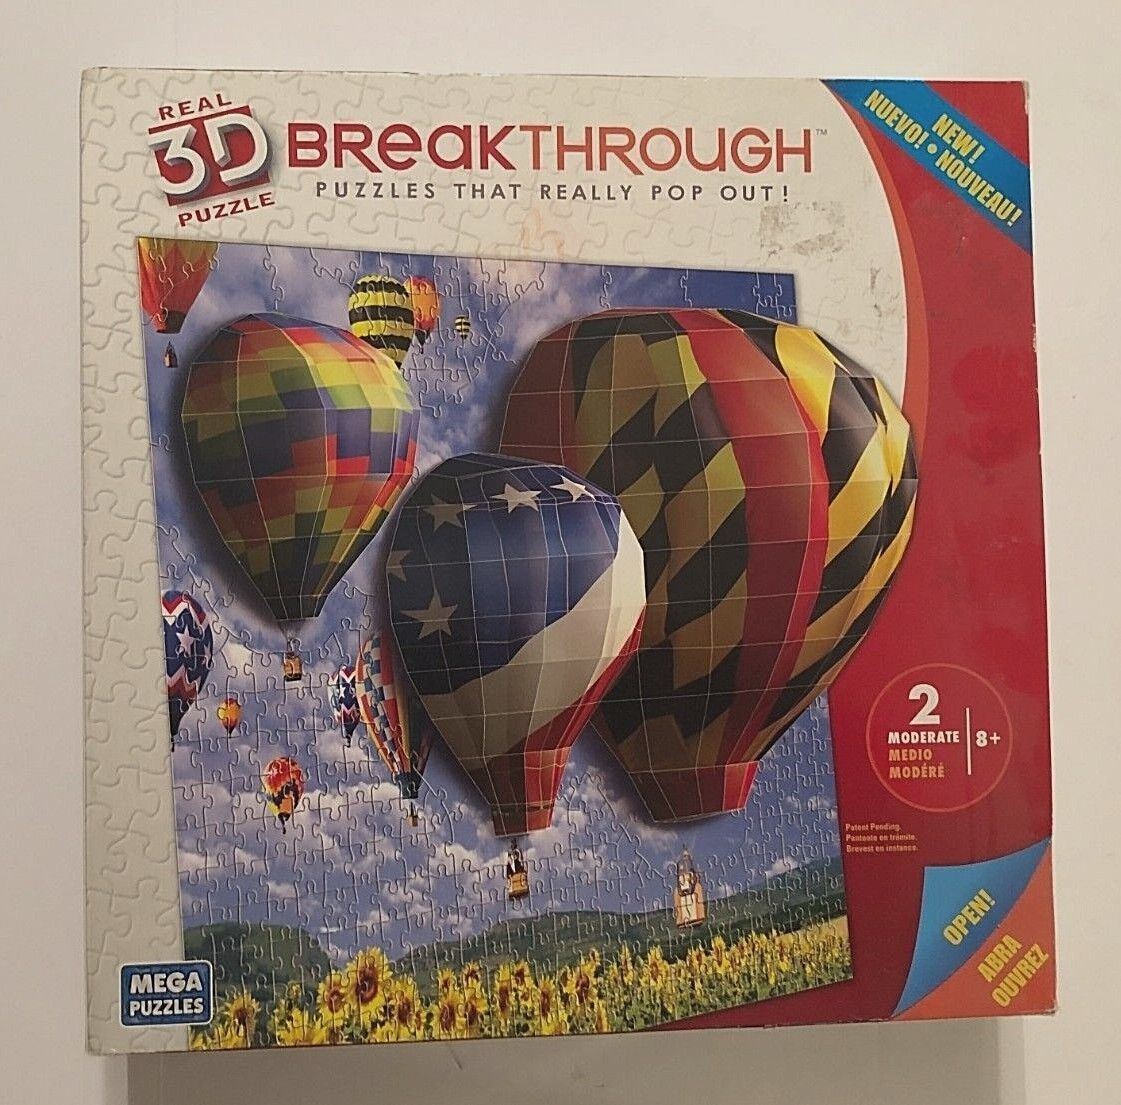 MEGA 2011 Puzzles Hot Air Balloons 3D Breakthrough Puzzle New - $10.88